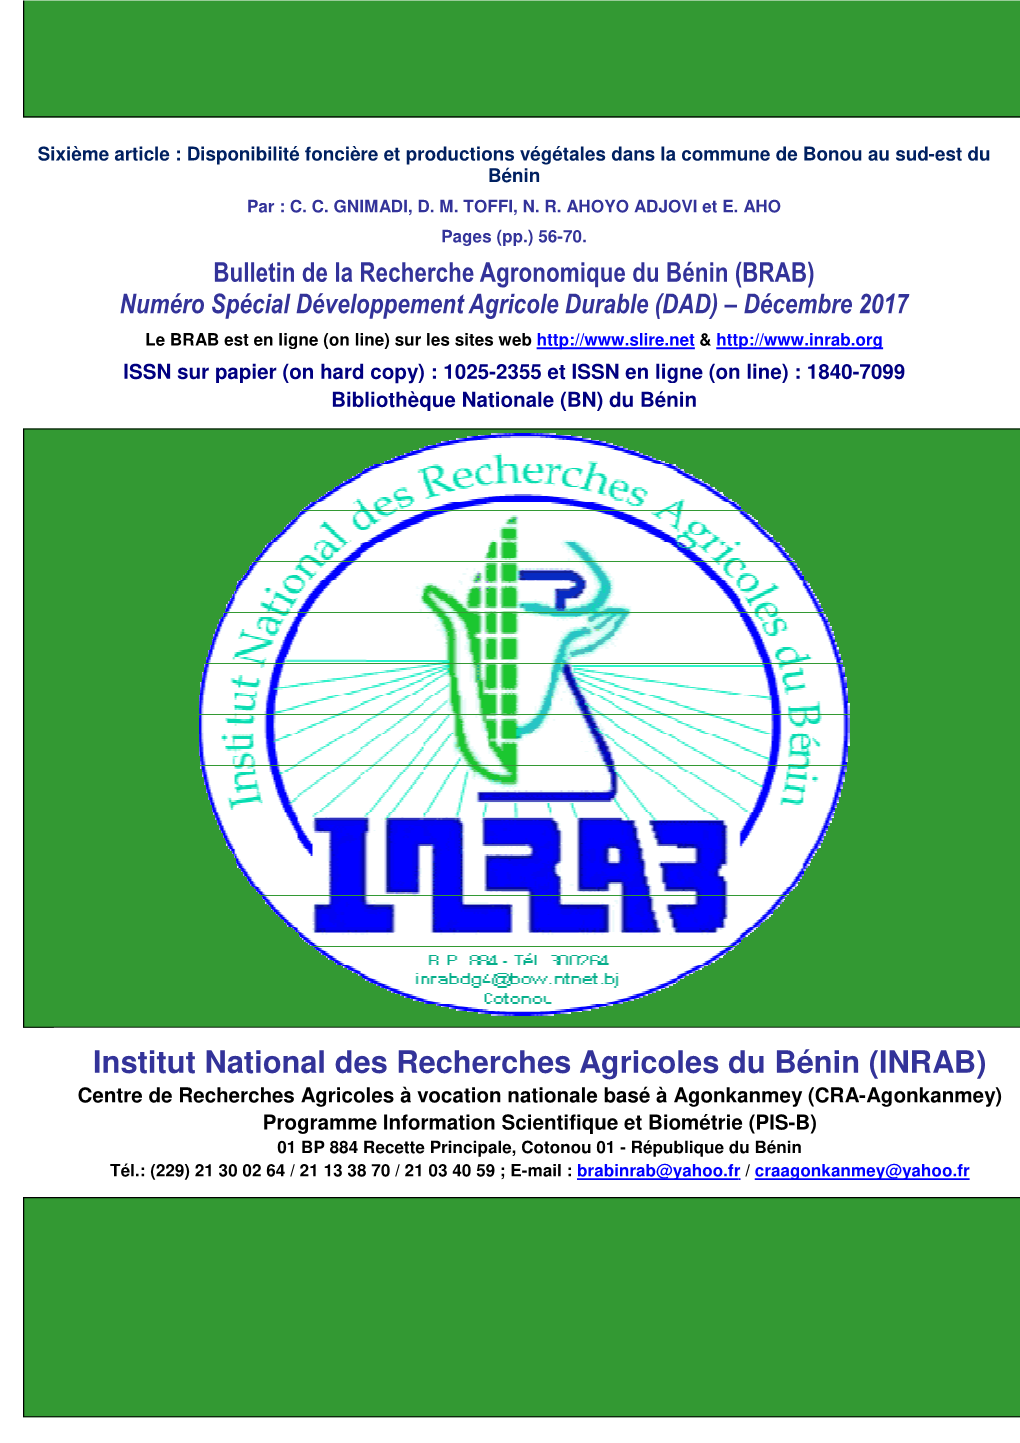 Institut National Des Recherch Ational Des Recherches Agricoles Du Bénin (IN Gricoles Du Bénin (INRAB)